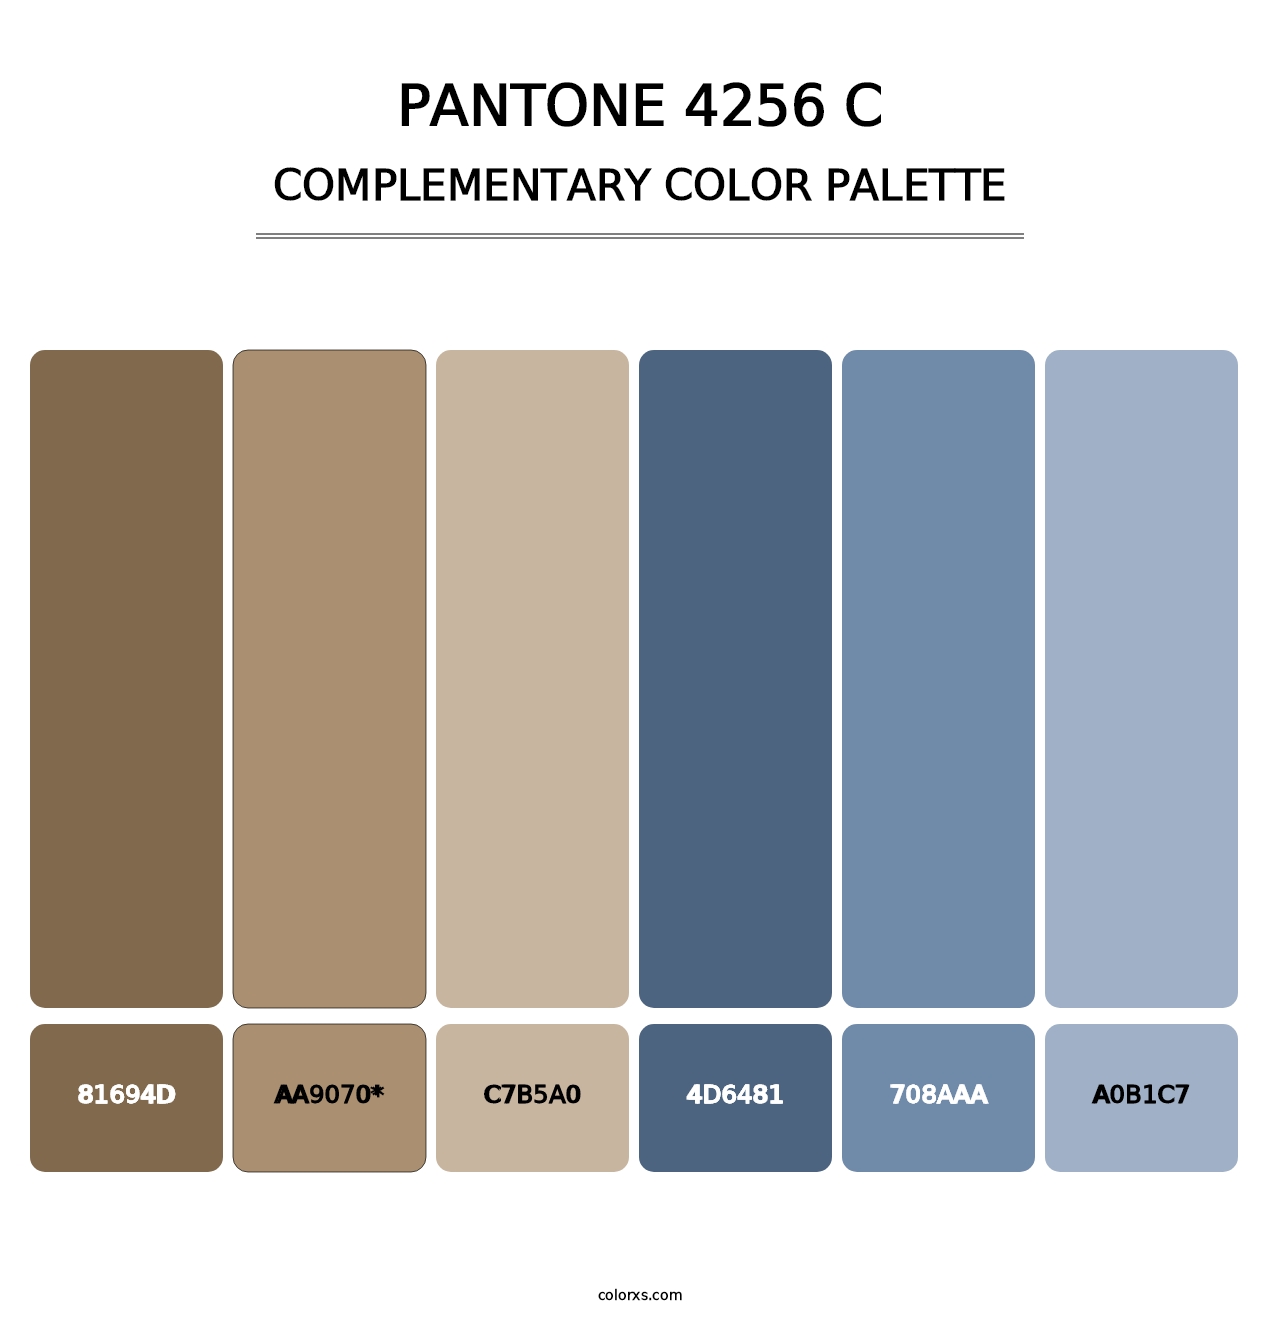 PANTONE 4256 C - Complementary Color Palette